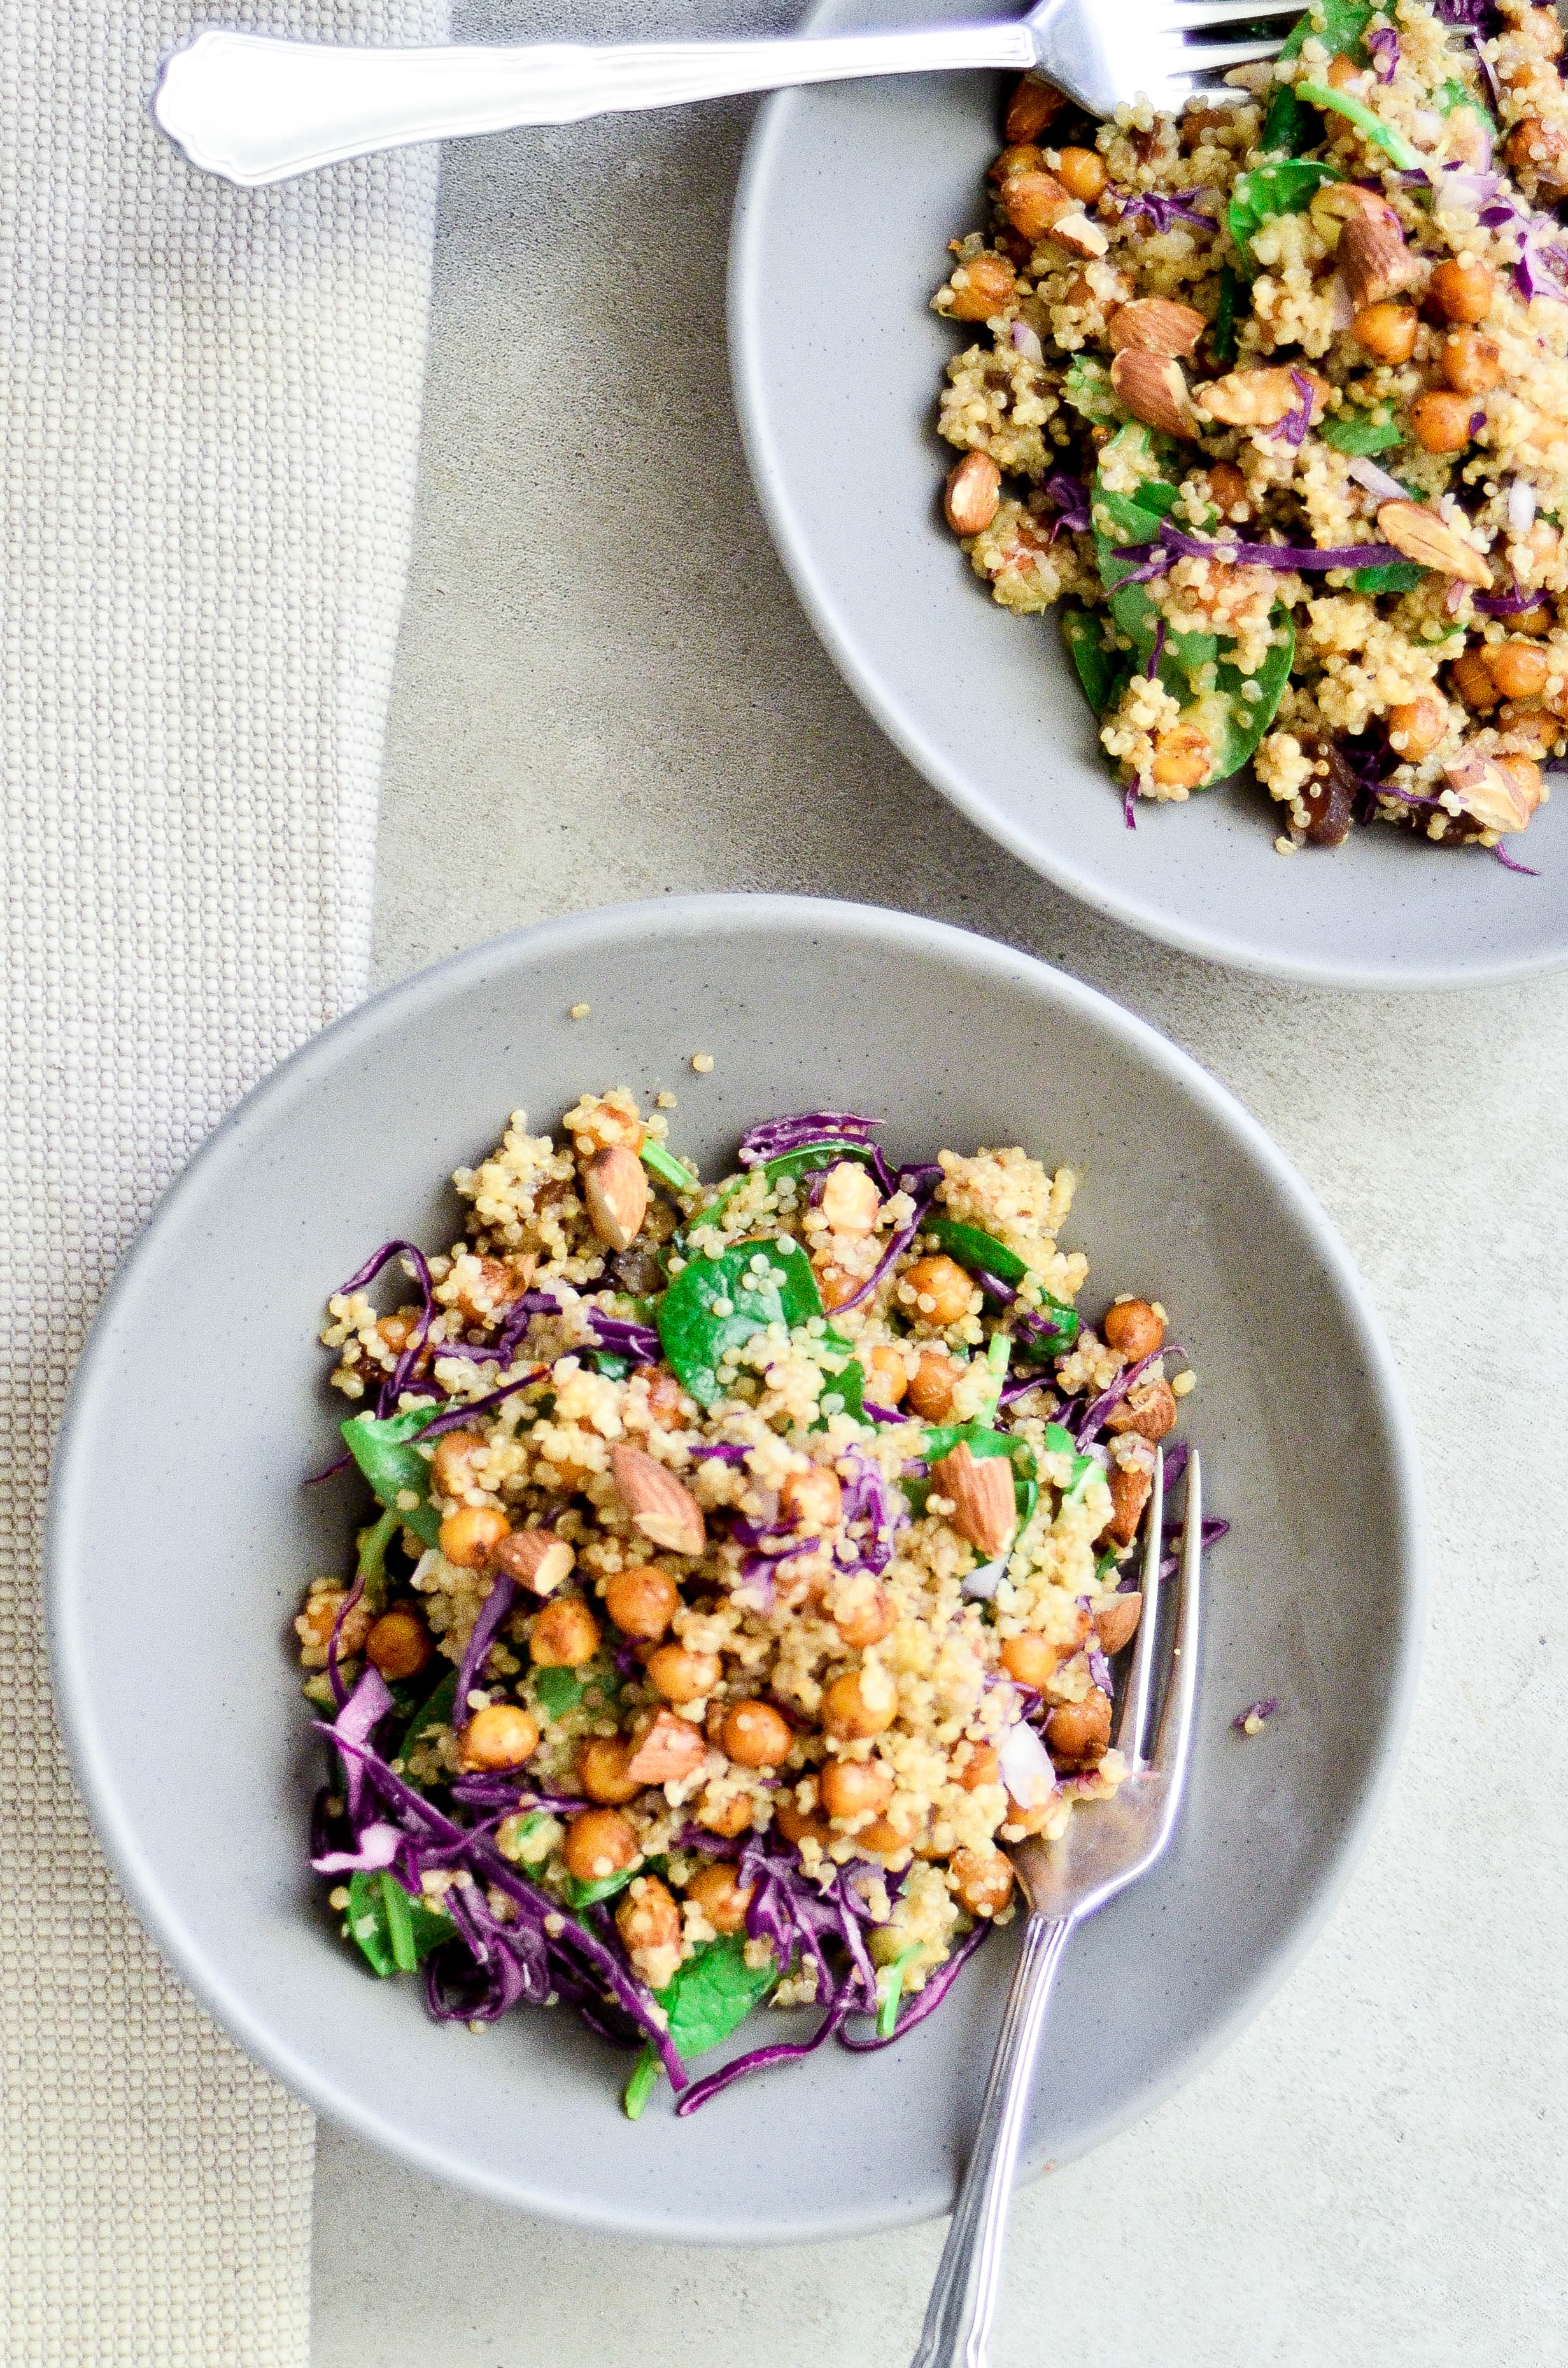 Warm Quinoa Salad | Honey Mustard Dressing | Garbanzo Bean Croutons || simple, easy, quick, delicious, healthy and warming! #puremamas @julinovotny